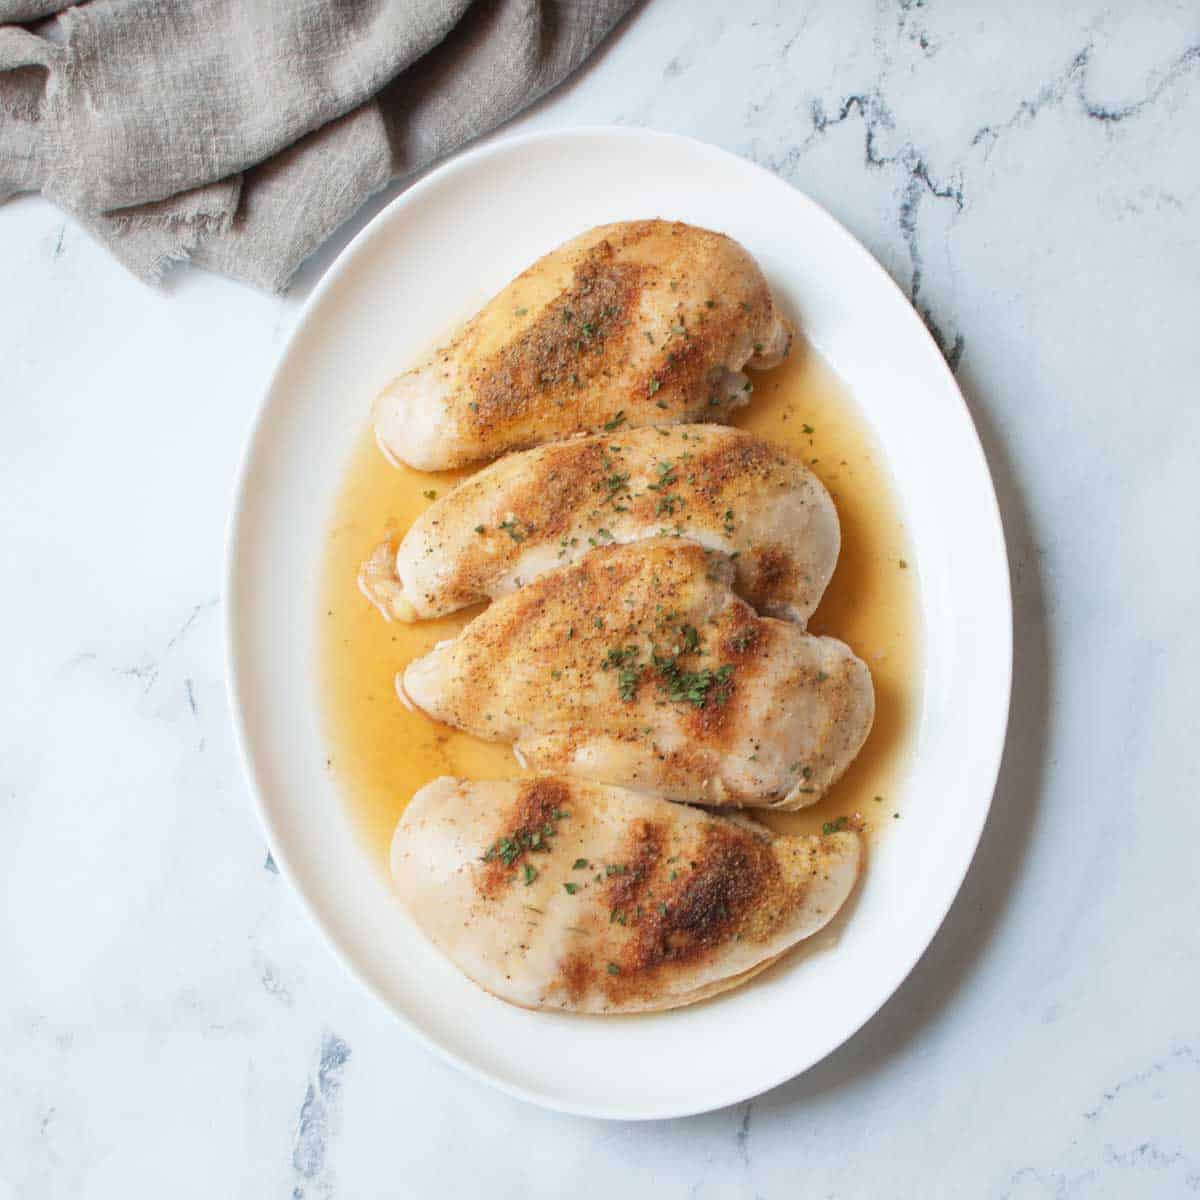 chicken breast recipes, 72 Healthy Chicken Breast Recipes For Dinner!